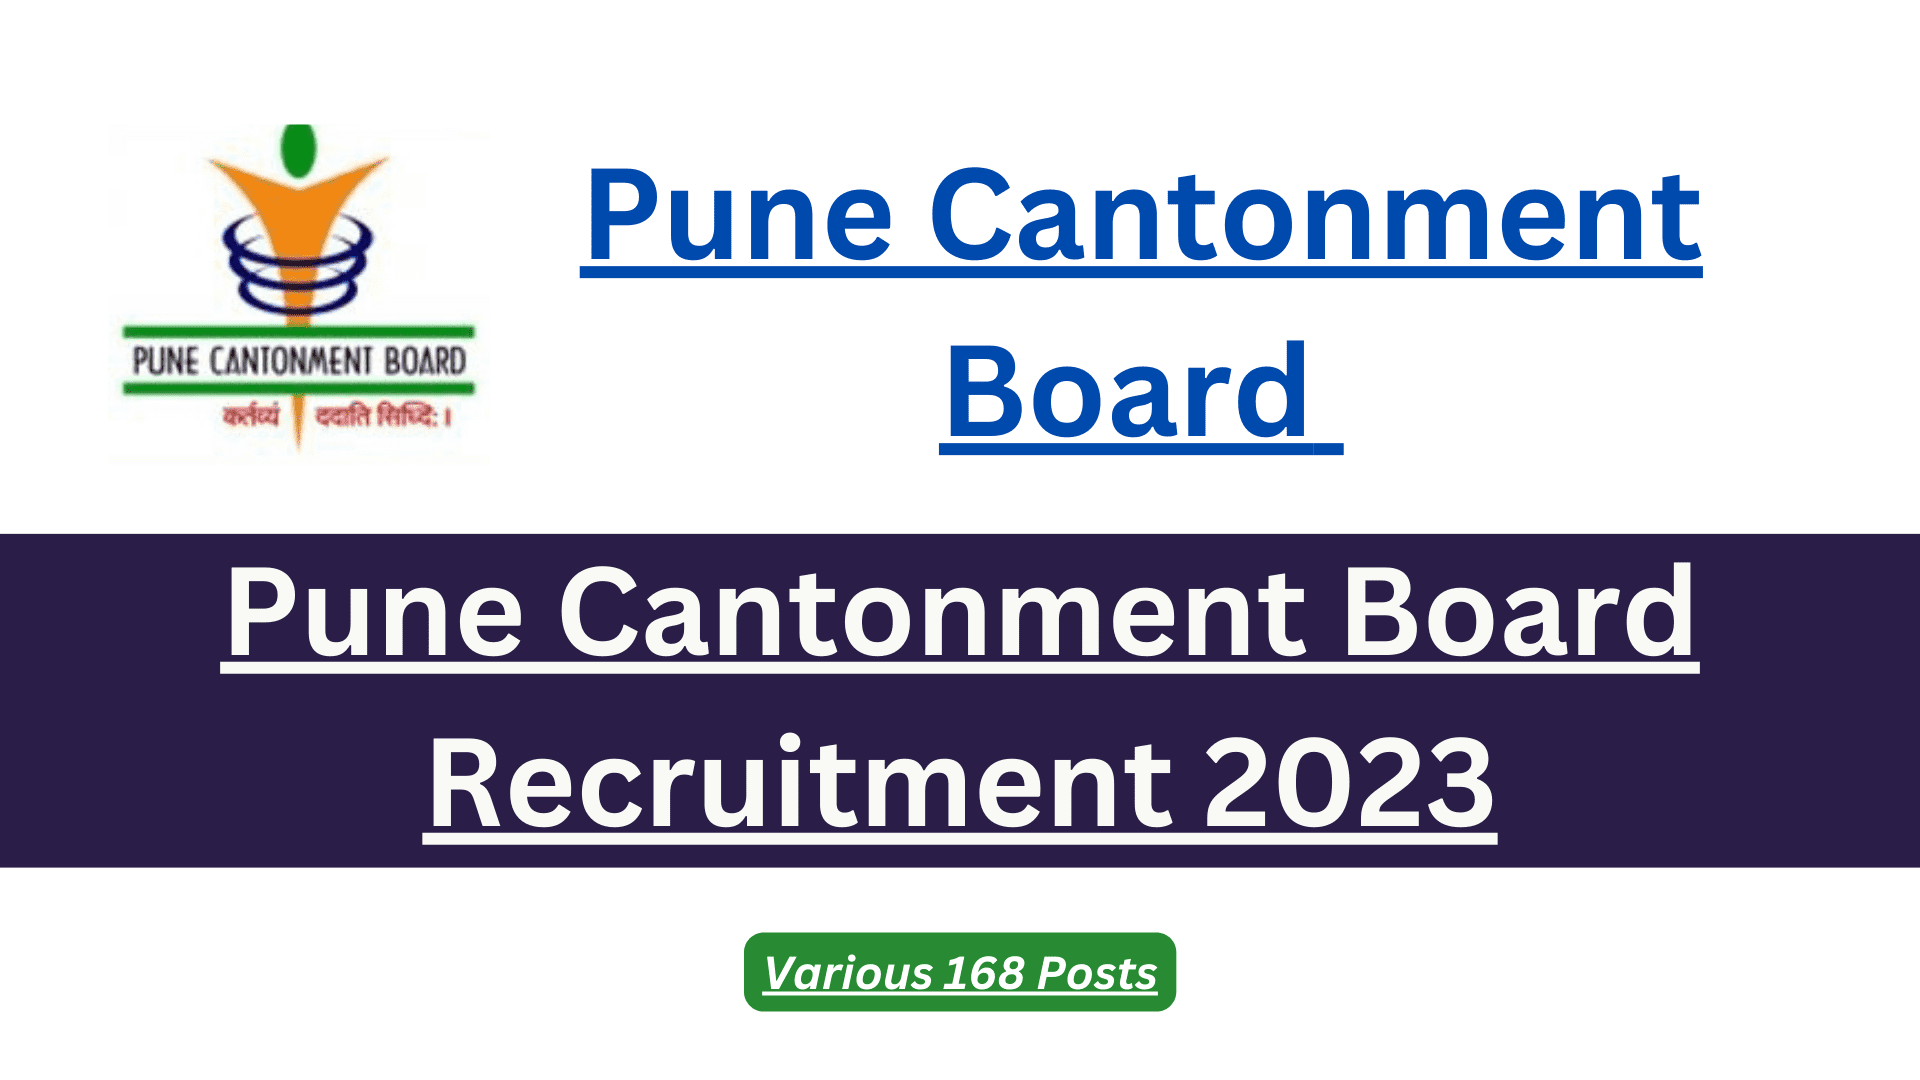 Pune Cantonment Board Recruitment 2023